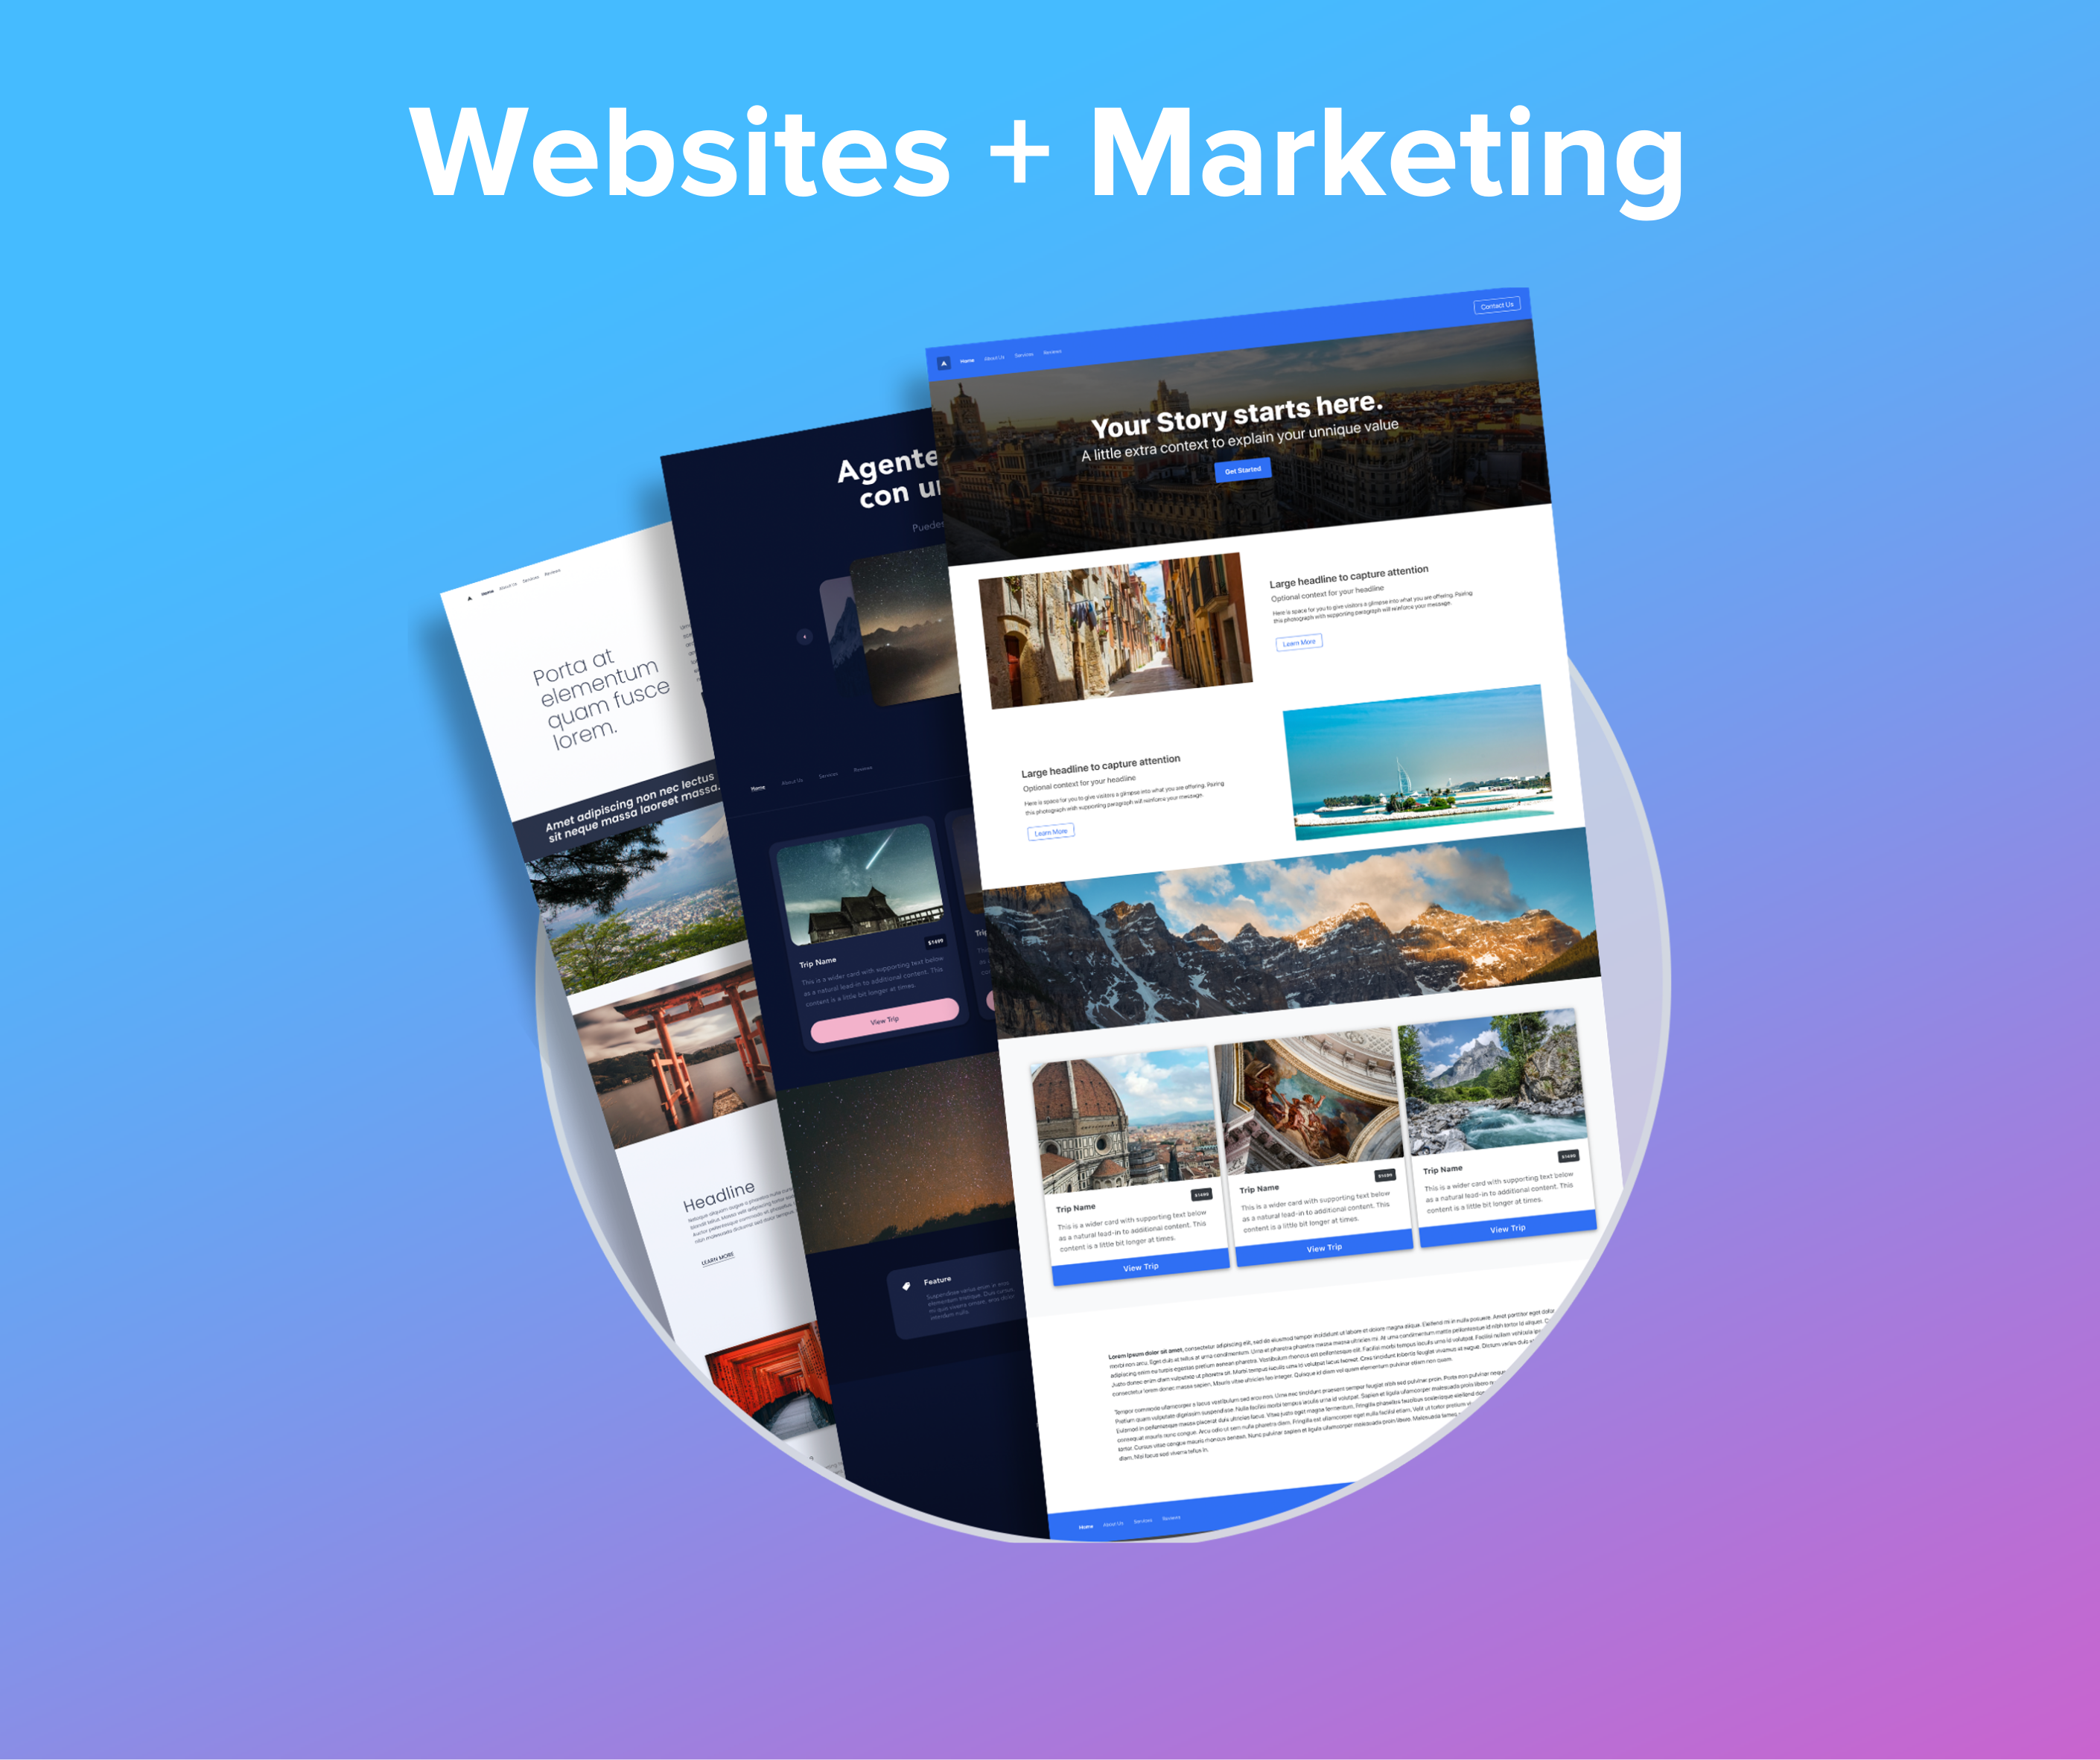 Websites + Marketing